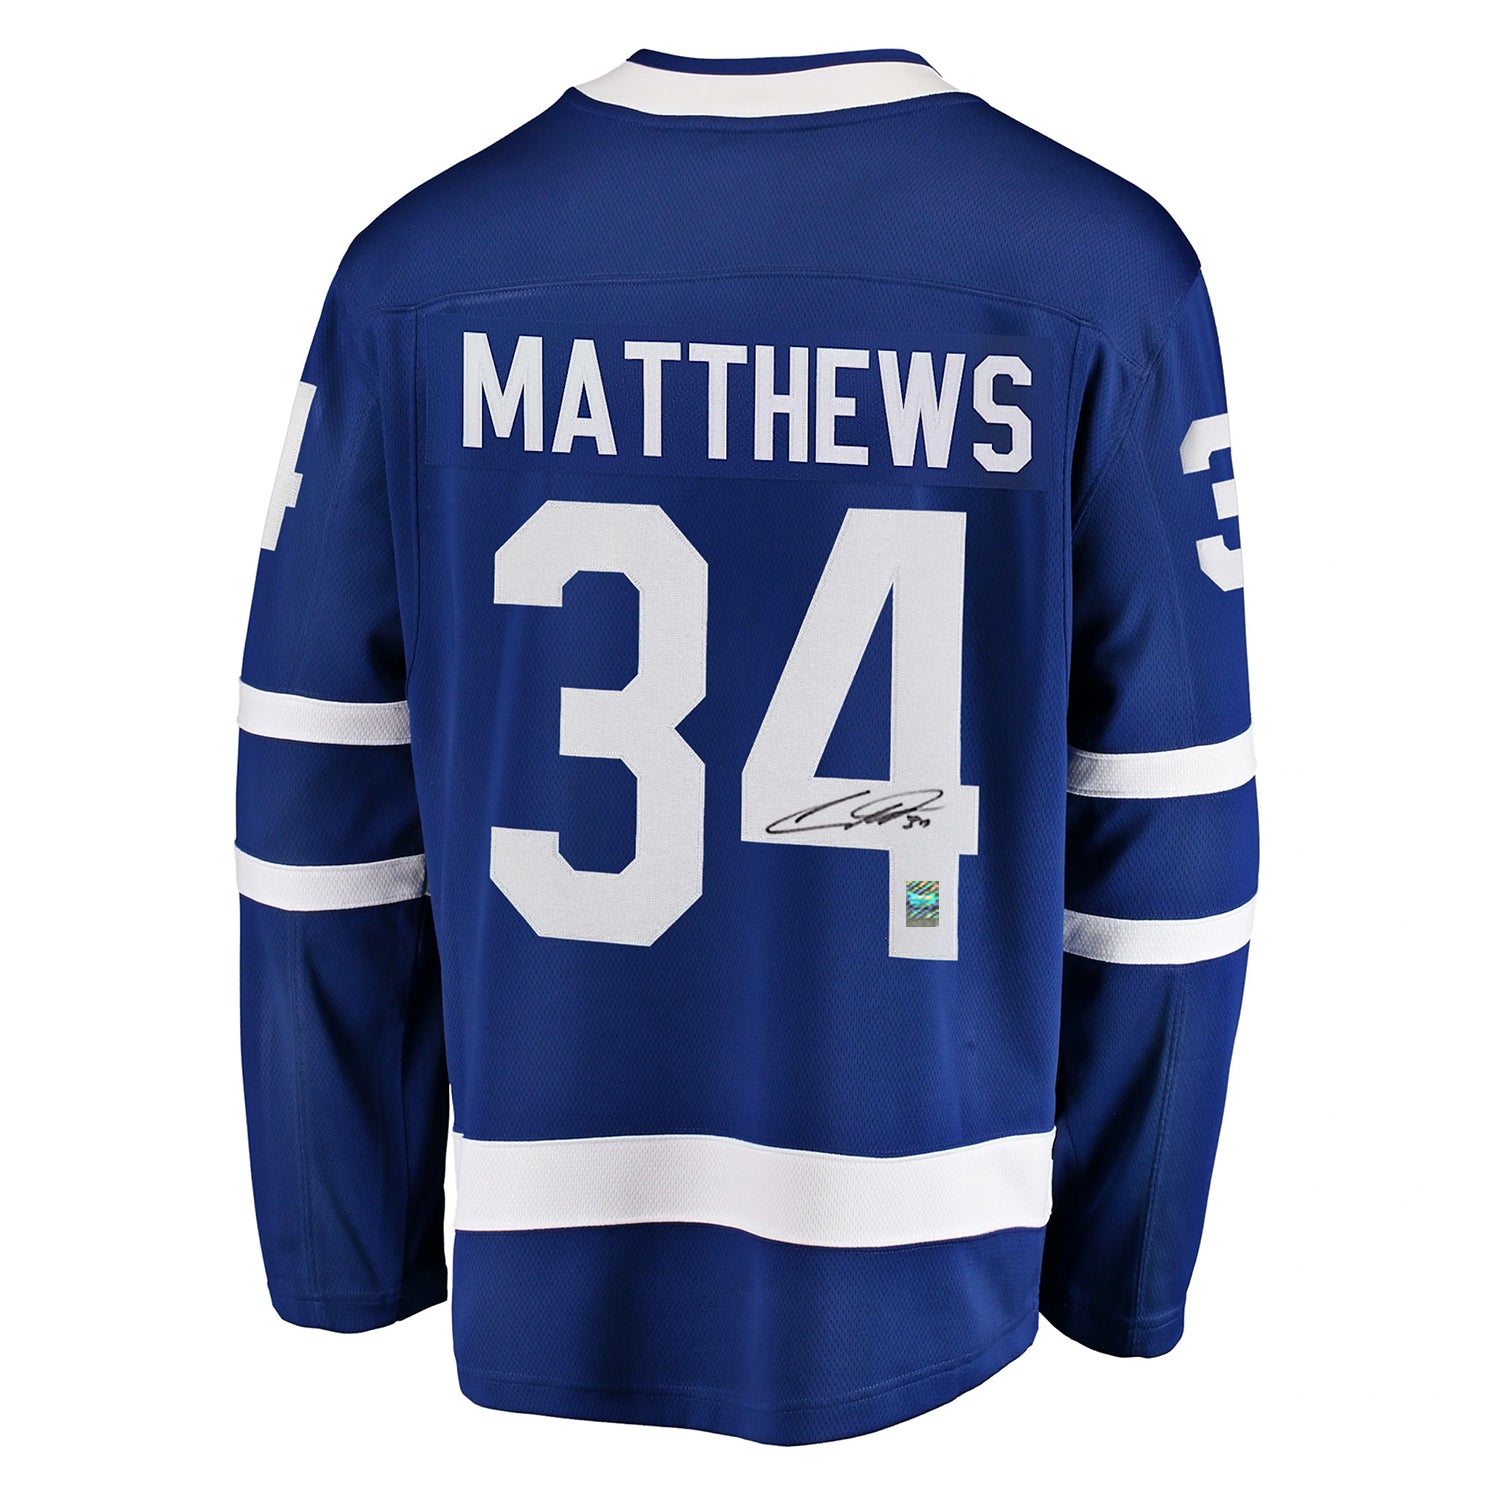 NHL Auston Matthews Signed Jerseys, Collectible Auston Matthews Signed  Jerseys, NHL Auston Matthews Memorabilia Jerseys